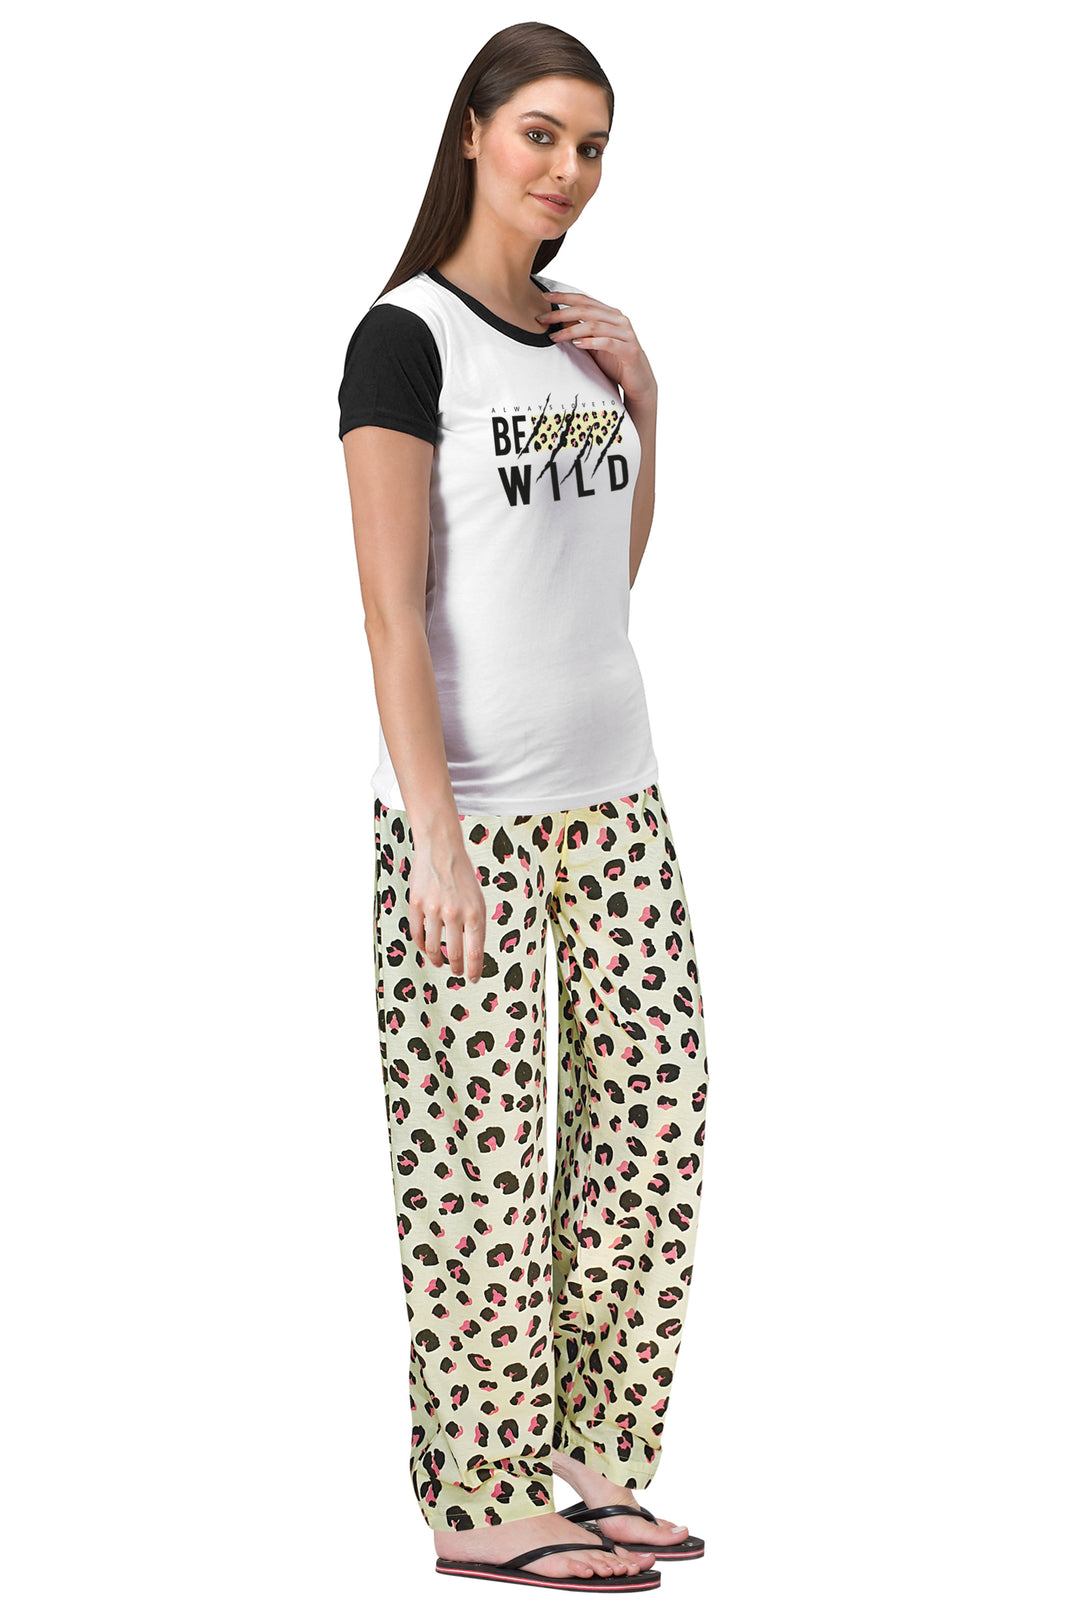 FflirtyGo Be Wild Printed Top and Pyjama Set - FflirtyGo